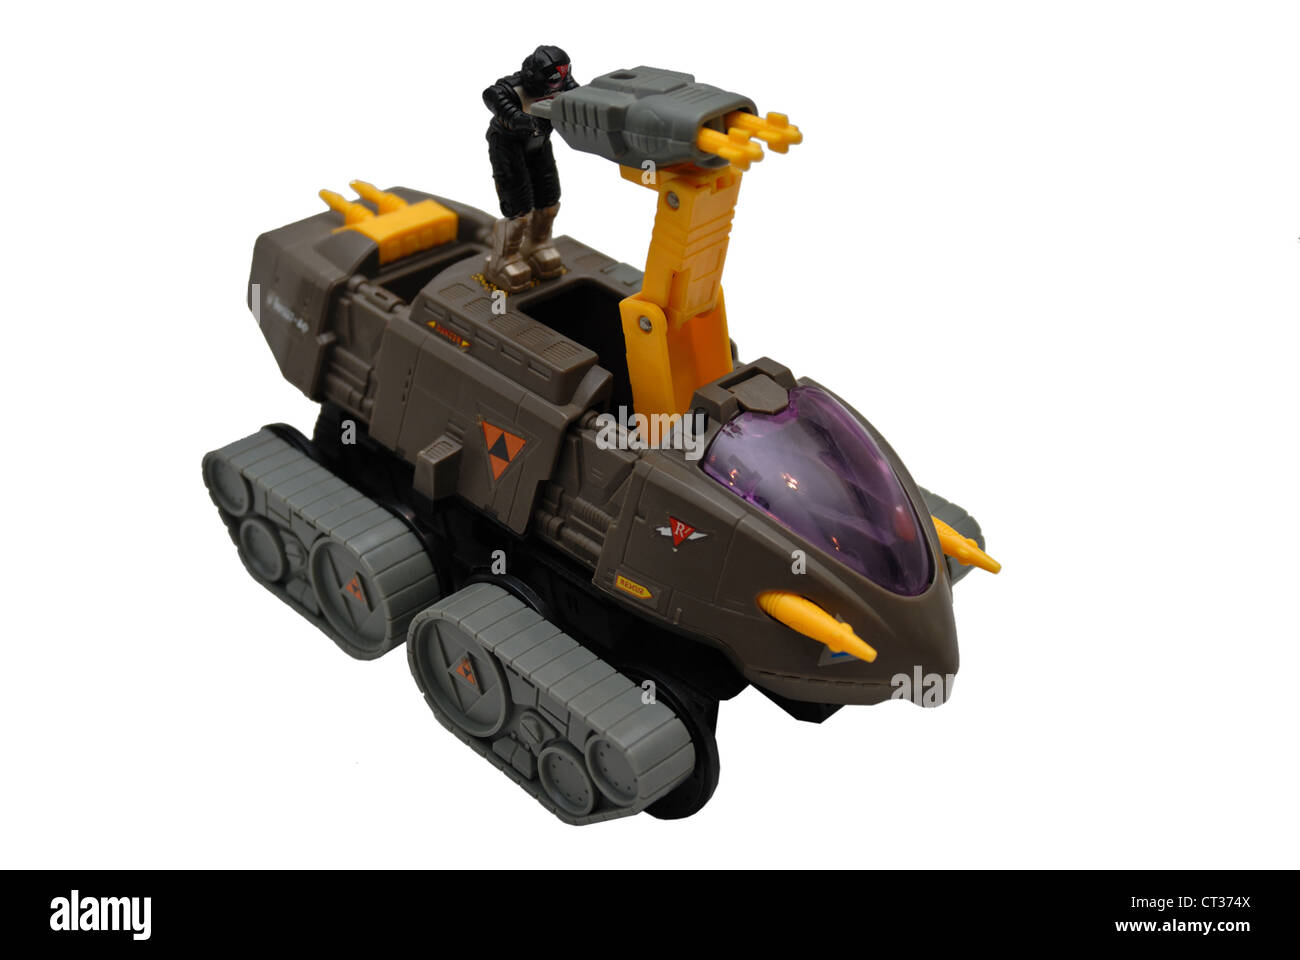 Starcom vintage space toy, land vehicle similar to a tank. Stock Photo